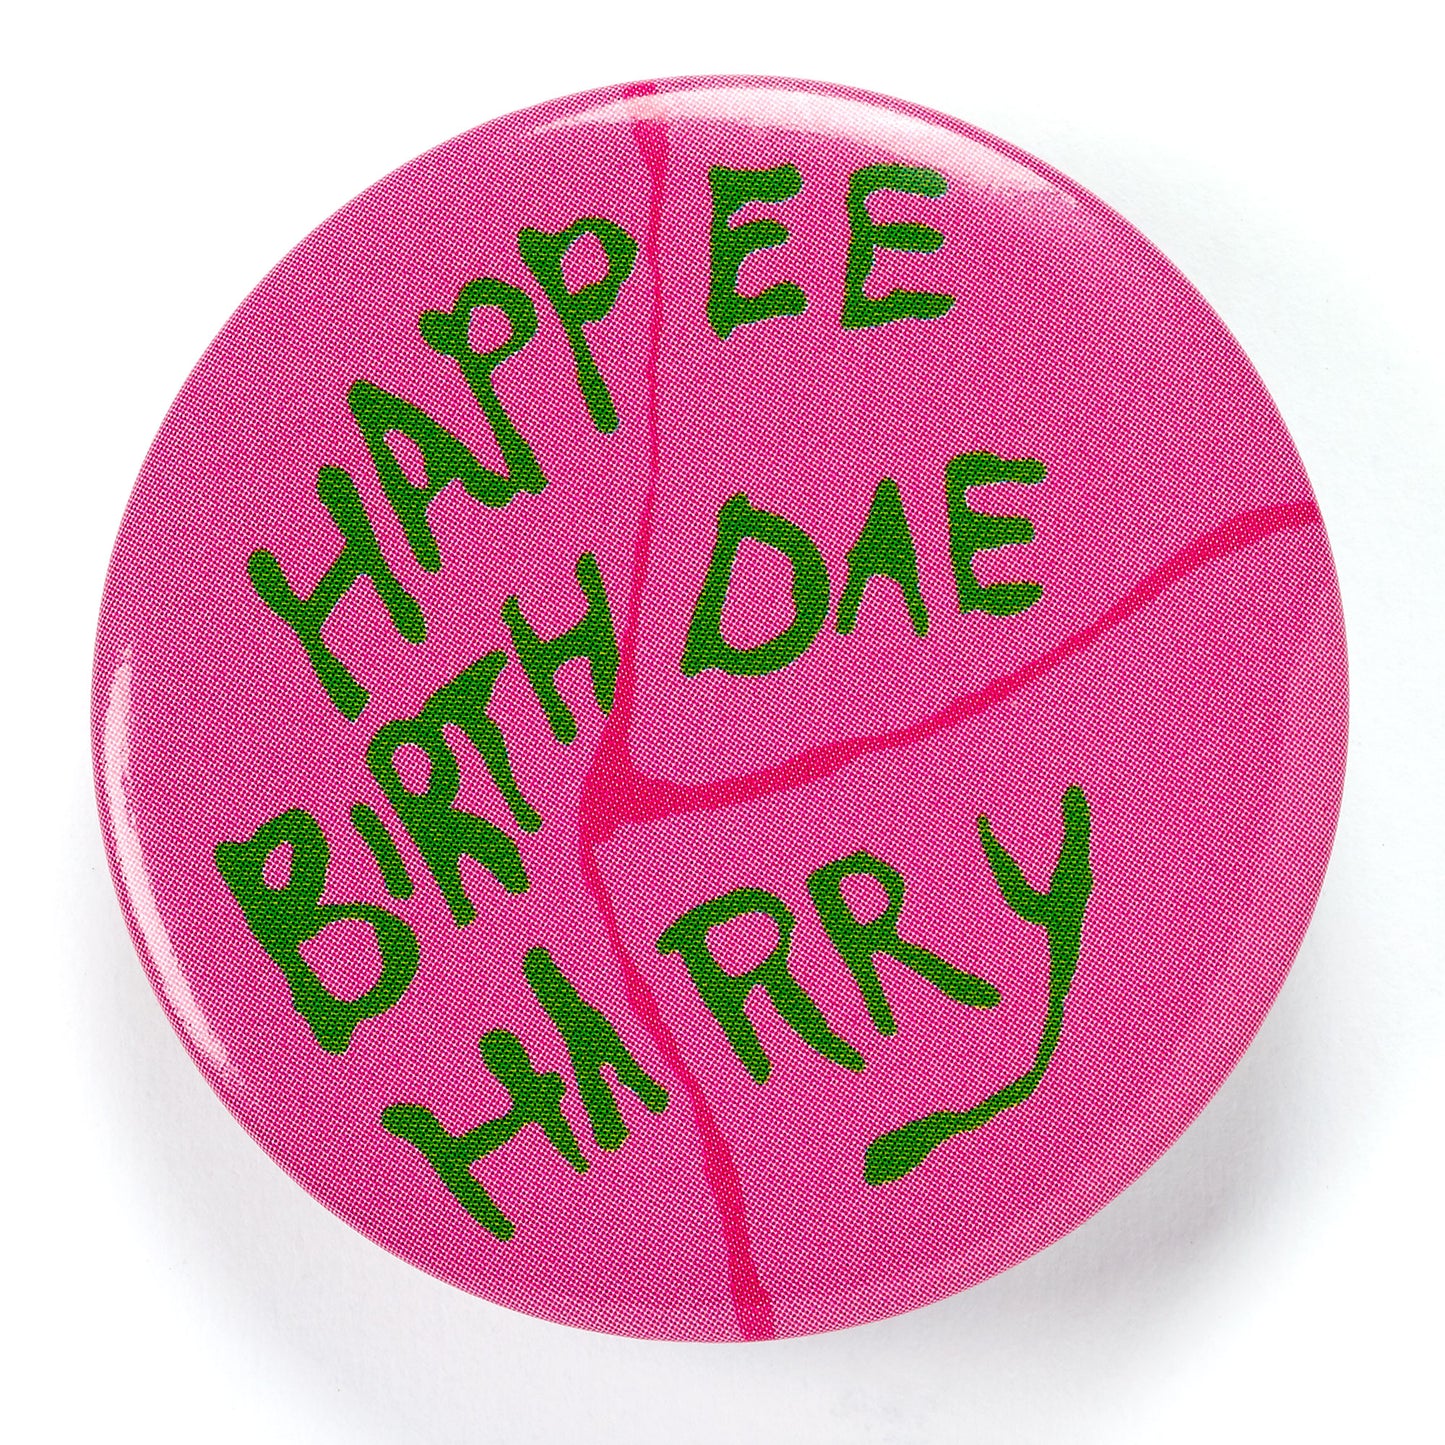 Harry Potter Happee Birthdae Cake Button Badge